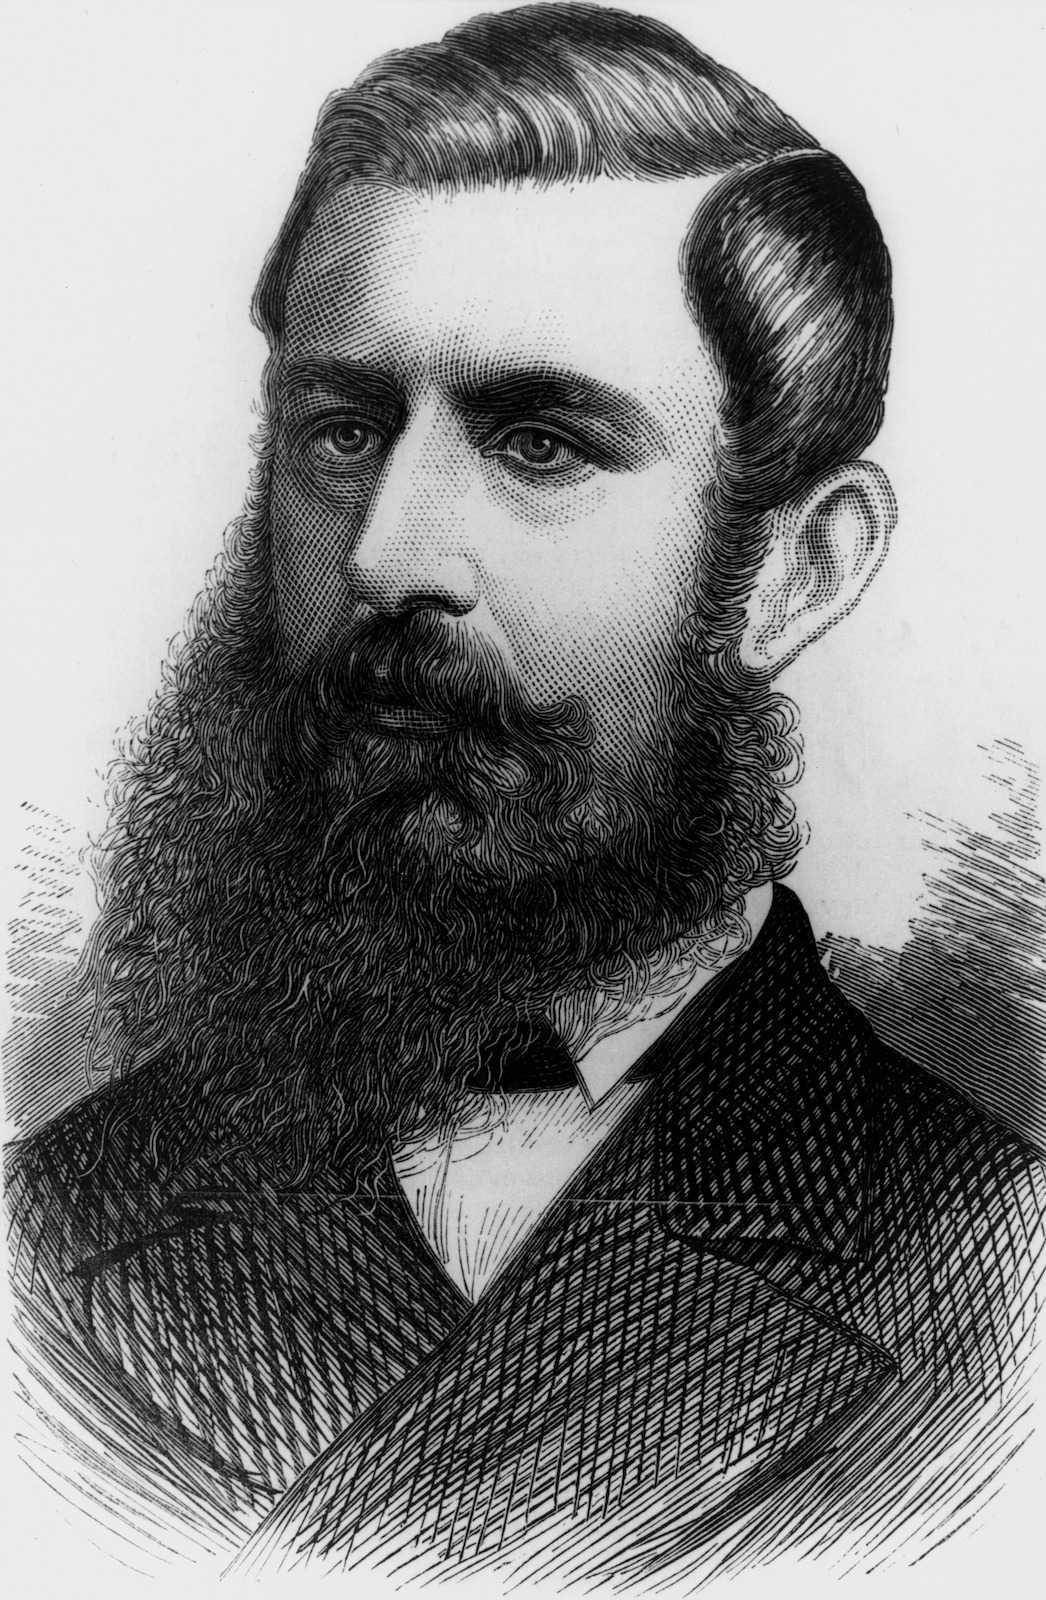 Justice George Rogers Harding, 1879